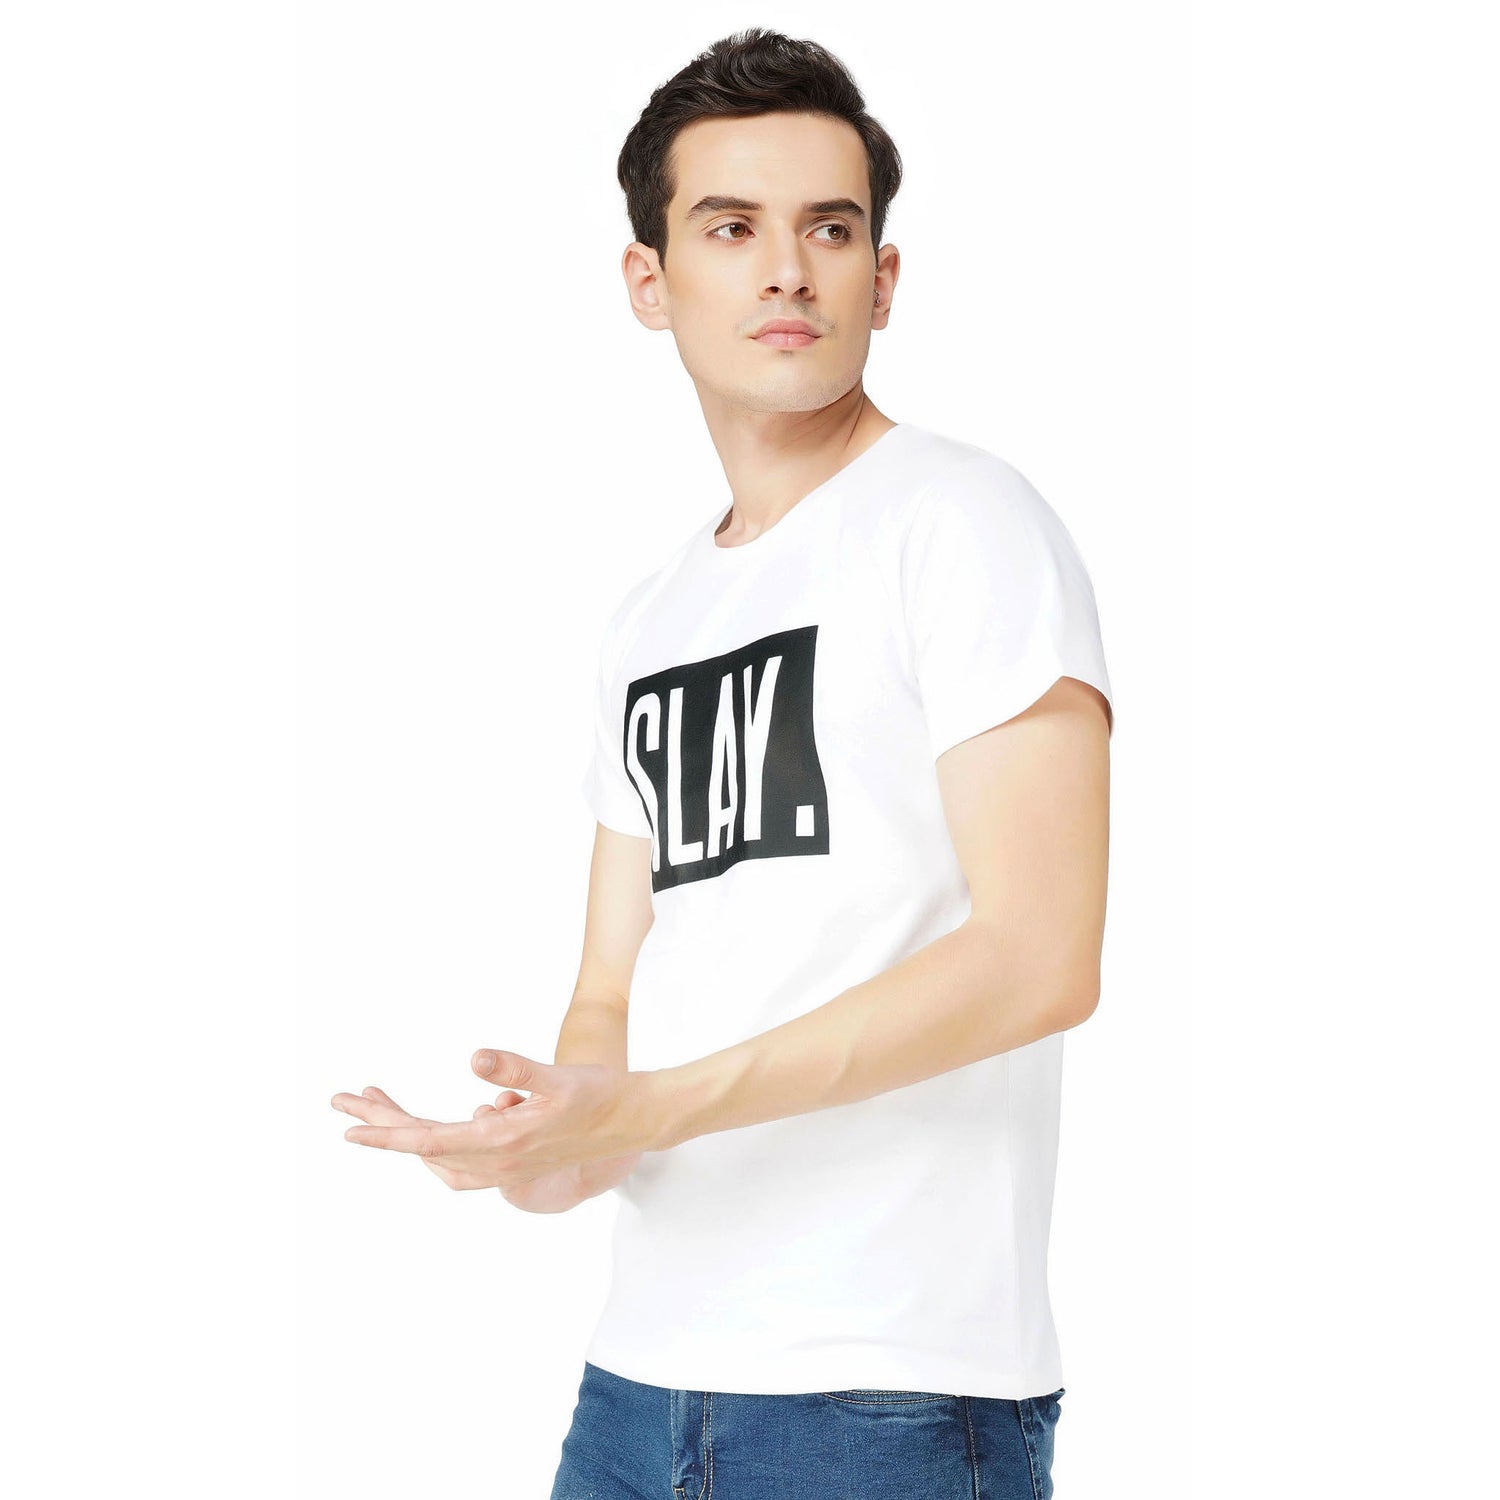 SLAY. Men's Premium Printed White T-shirt-clothing-to-slay.myshopify.com-T-Shirt